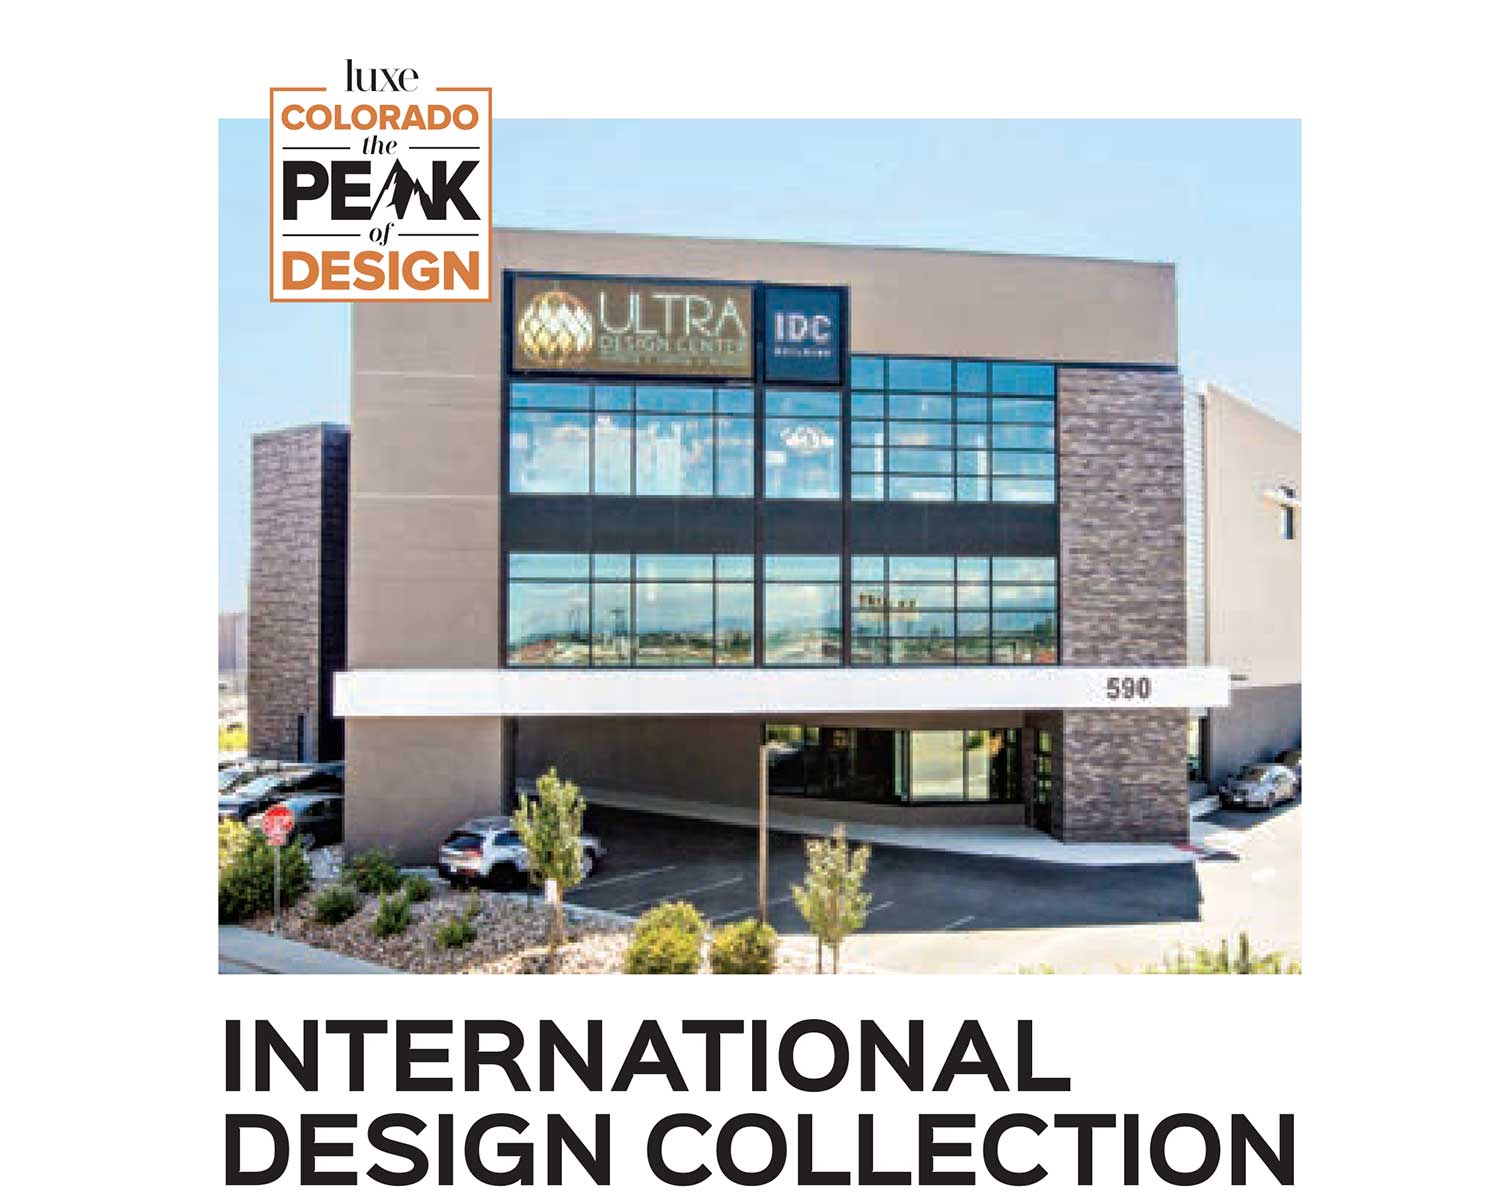 The IDC Sponsor of Luxe the Peak of Design